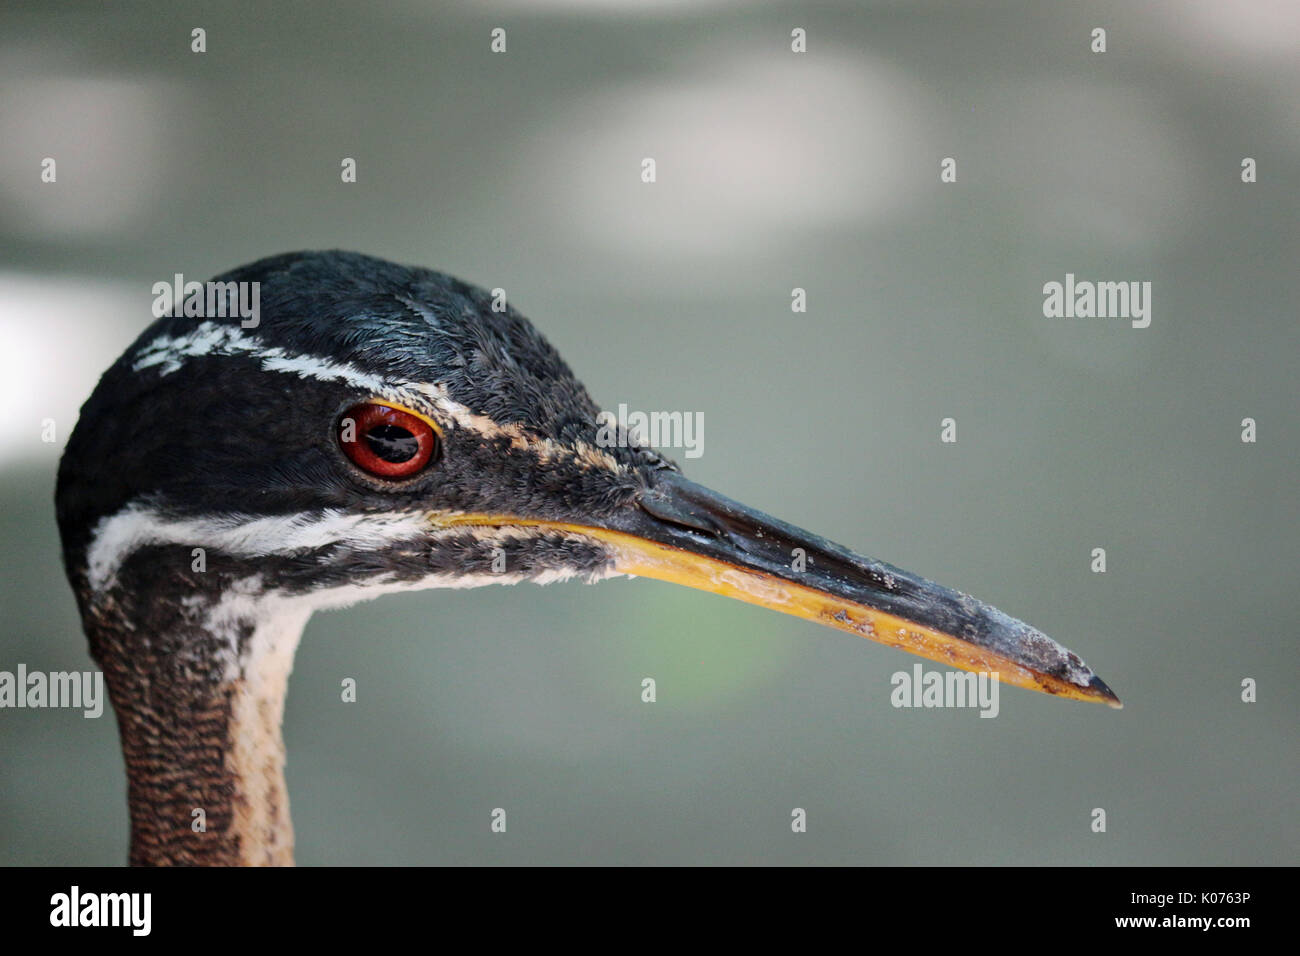 A Head Shot of the Sunbittern Bird Stock Photo - Alamy